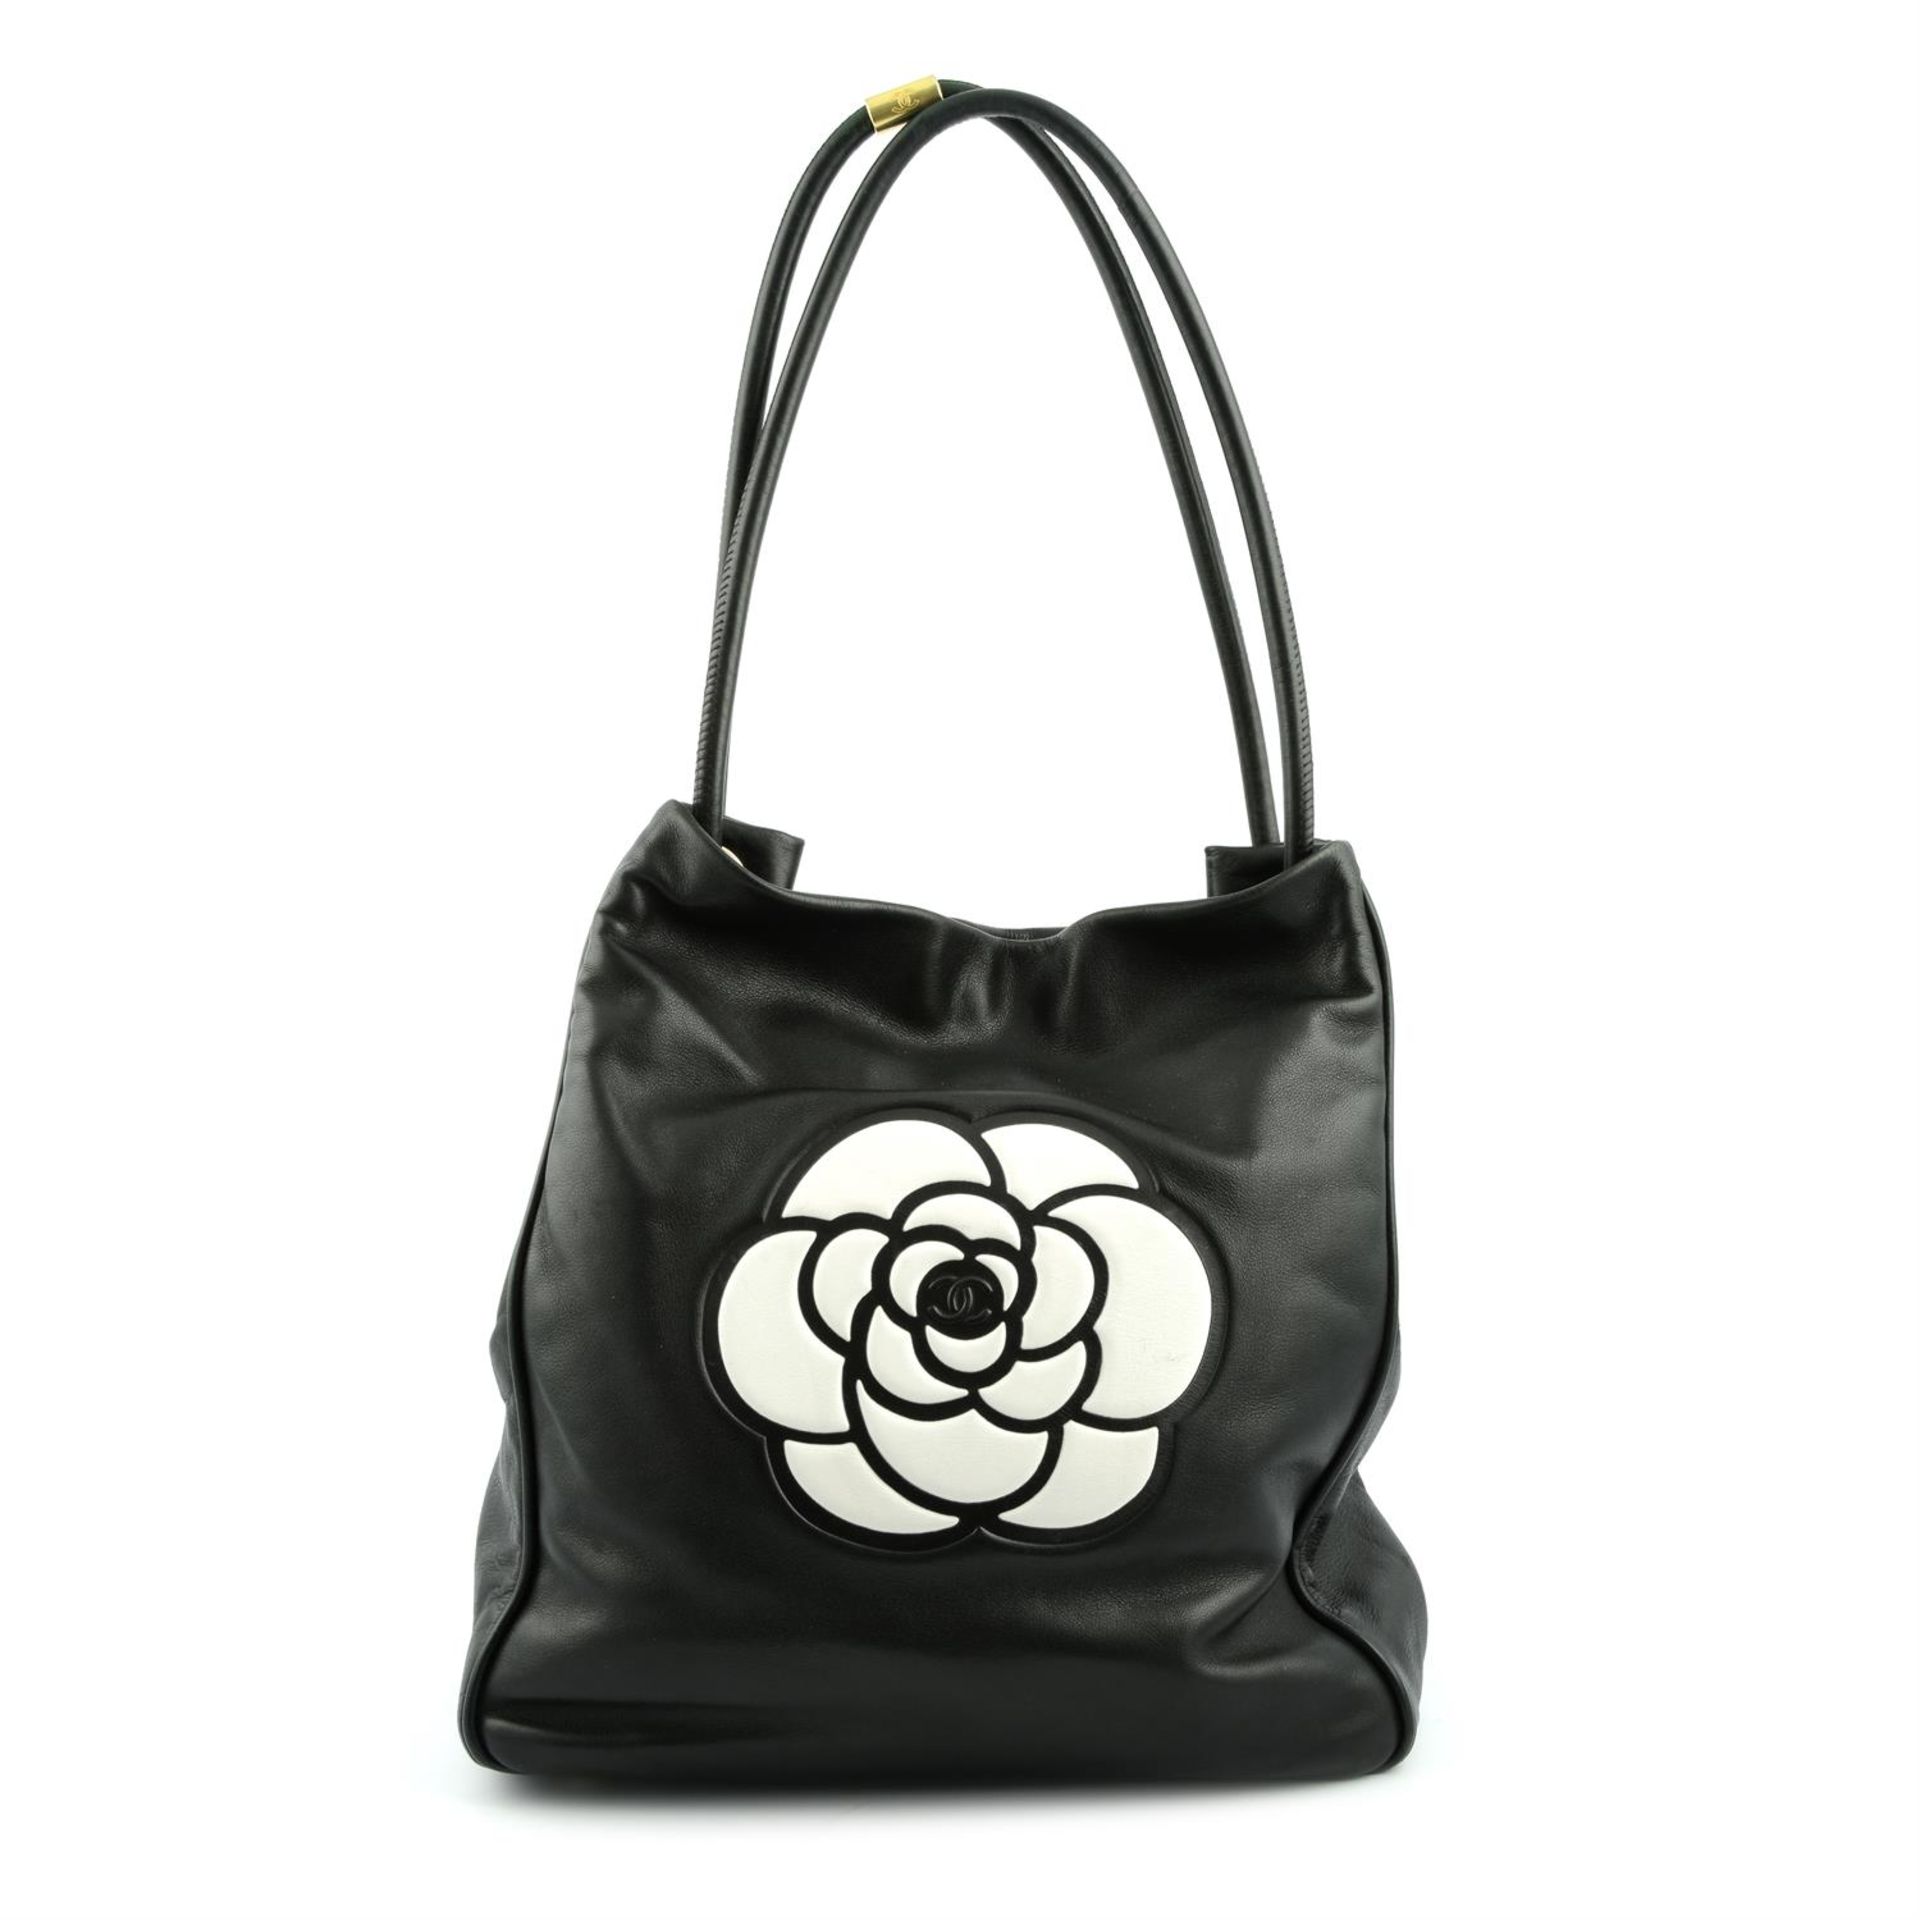 CHANEL - a black leather Camellia tote bag.